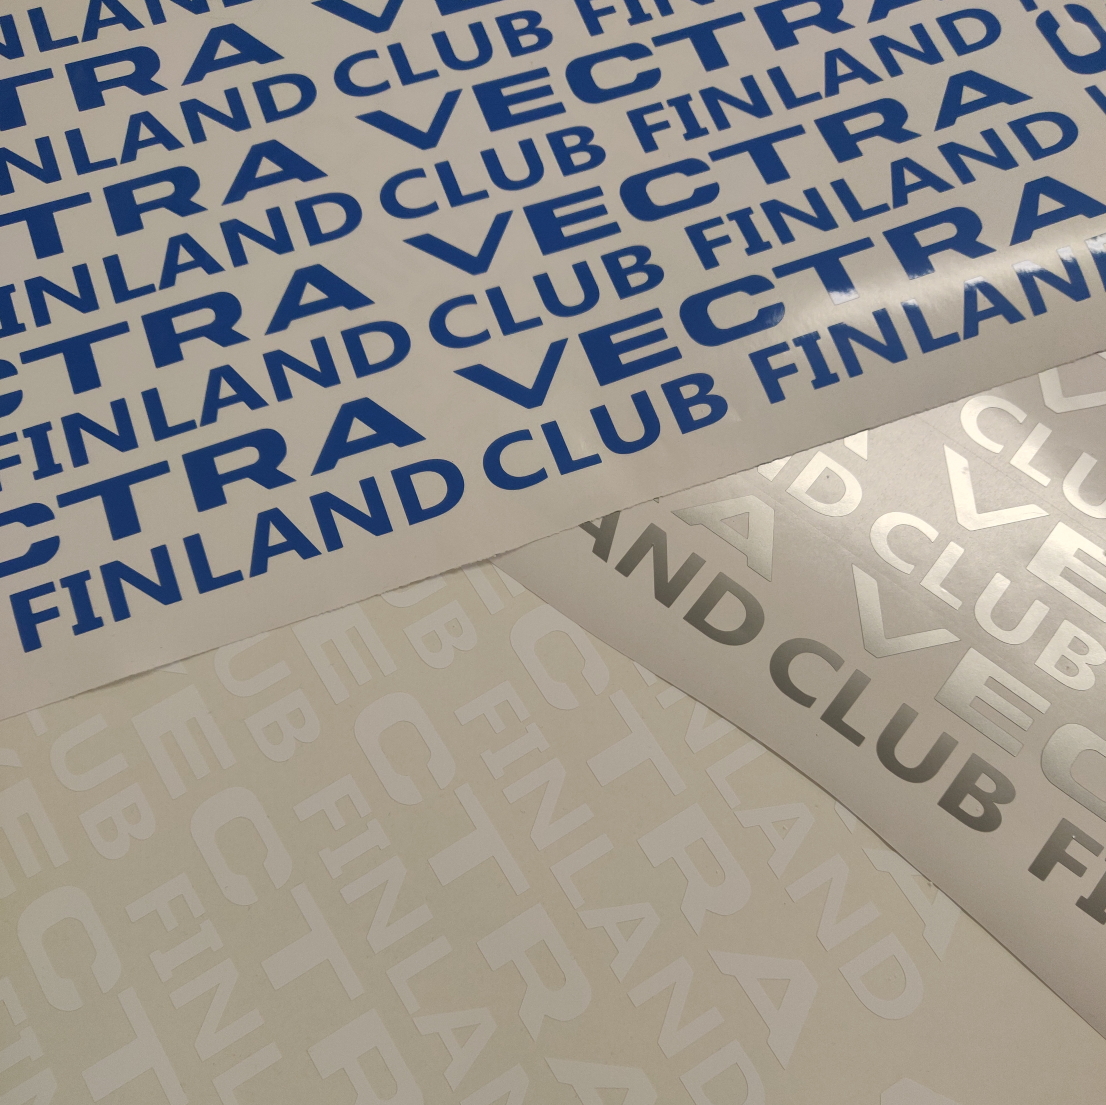 Vectra Club Finland